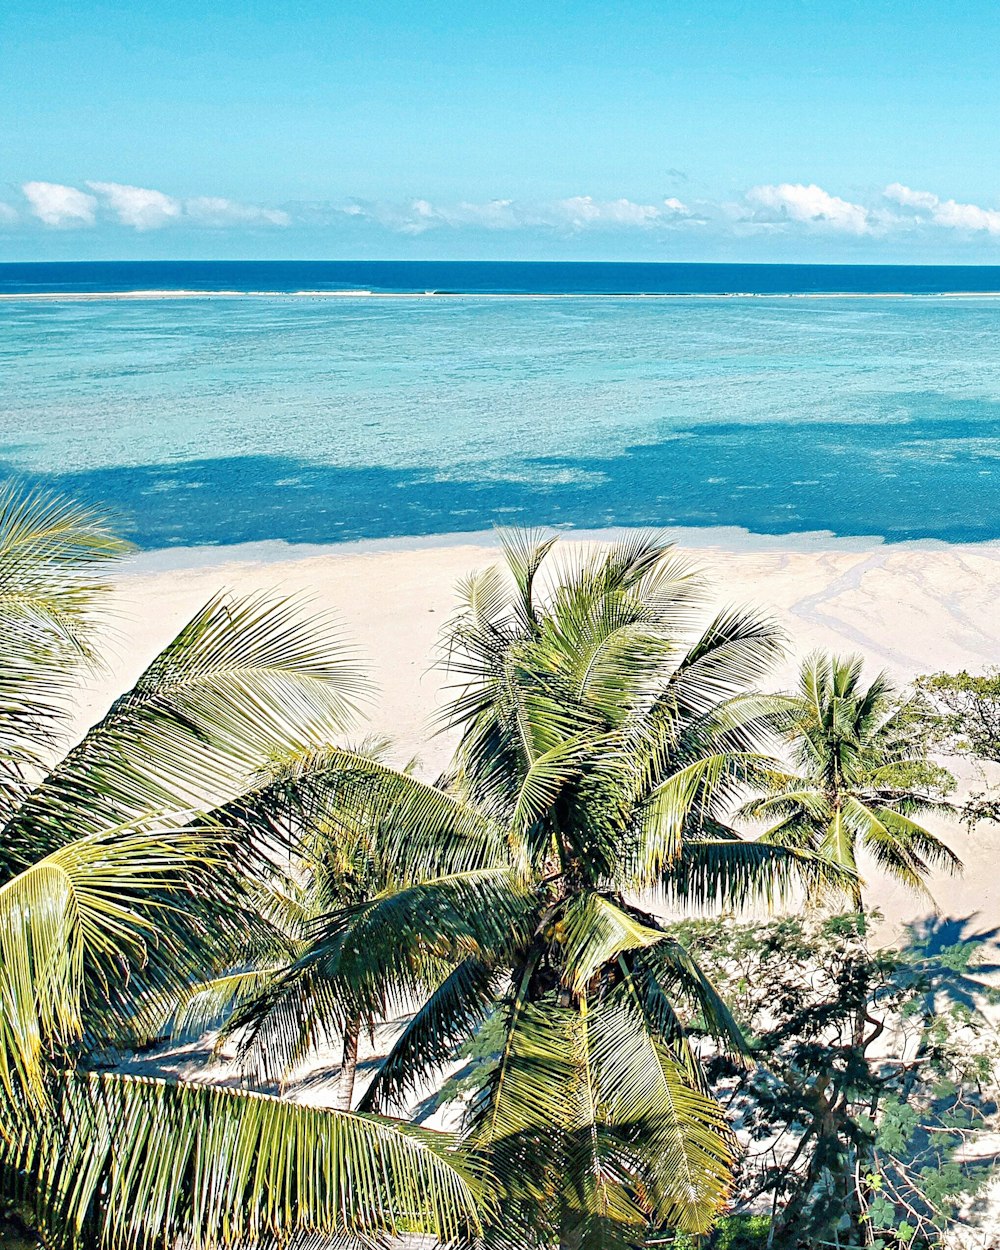 landscape photo of a sandy beach